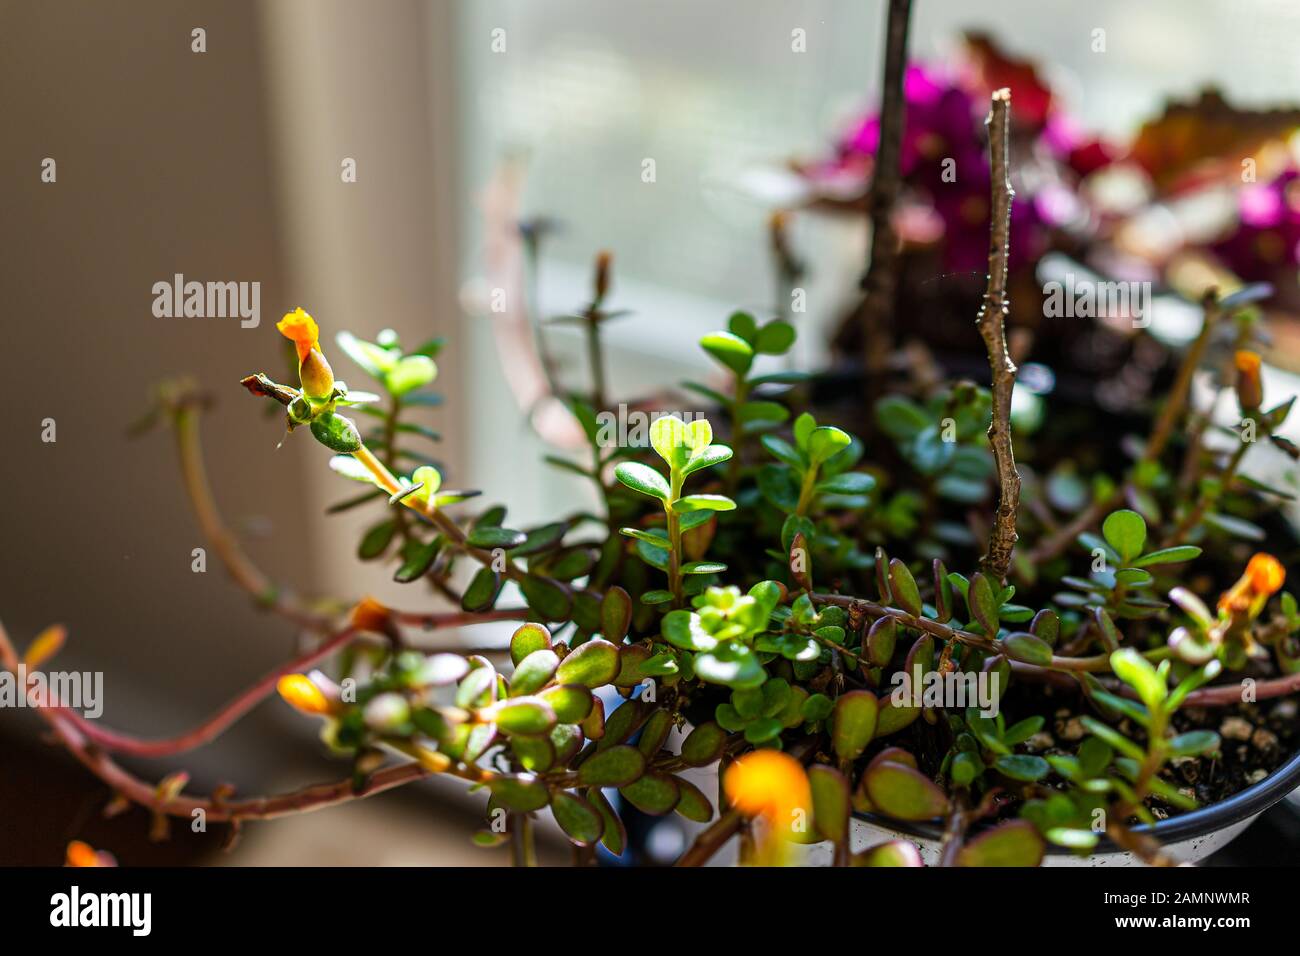 Macro closeup of green and yellow flower purslane plant in pot flowerpot indoor interior inside home decoration gardening showing texture Stock Photo